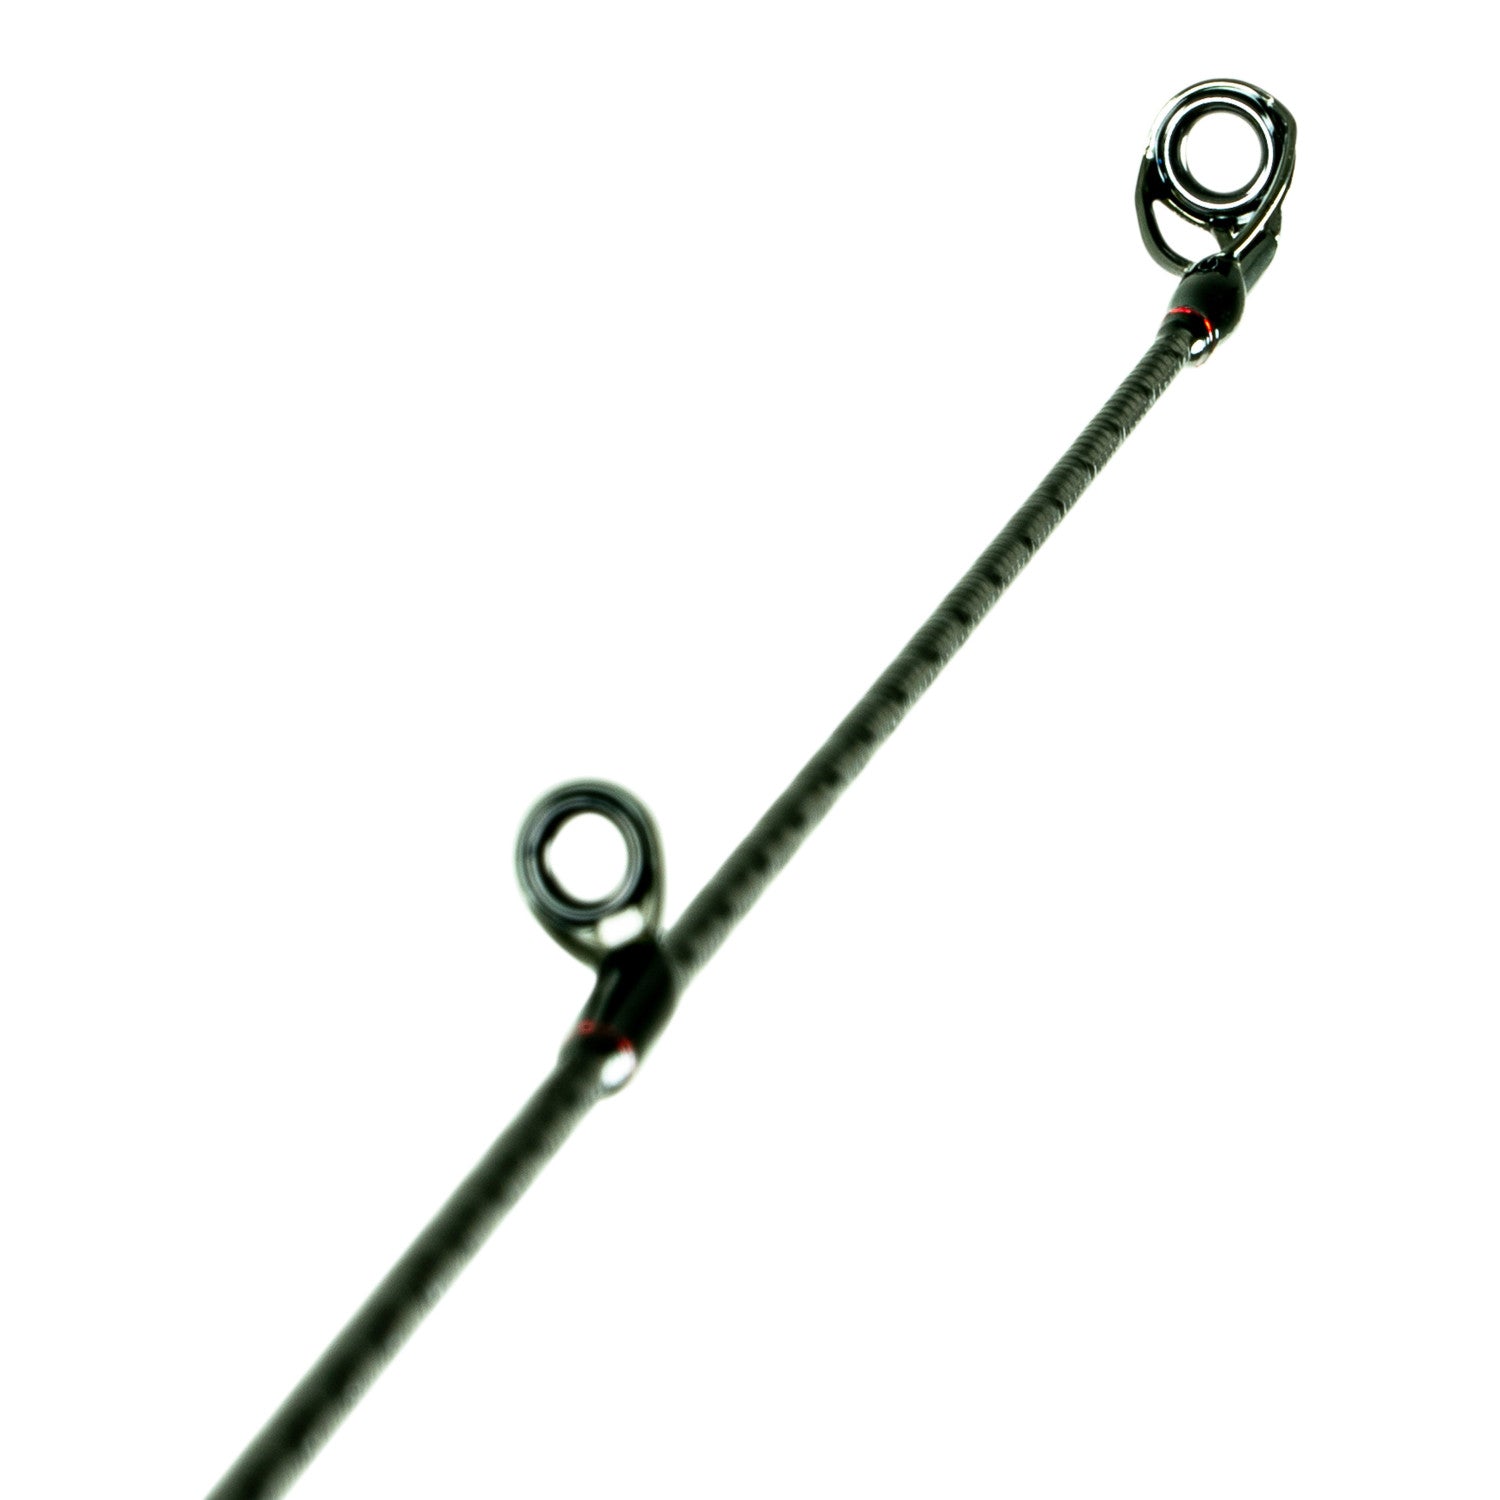 Shimano Clarus Casting Rod